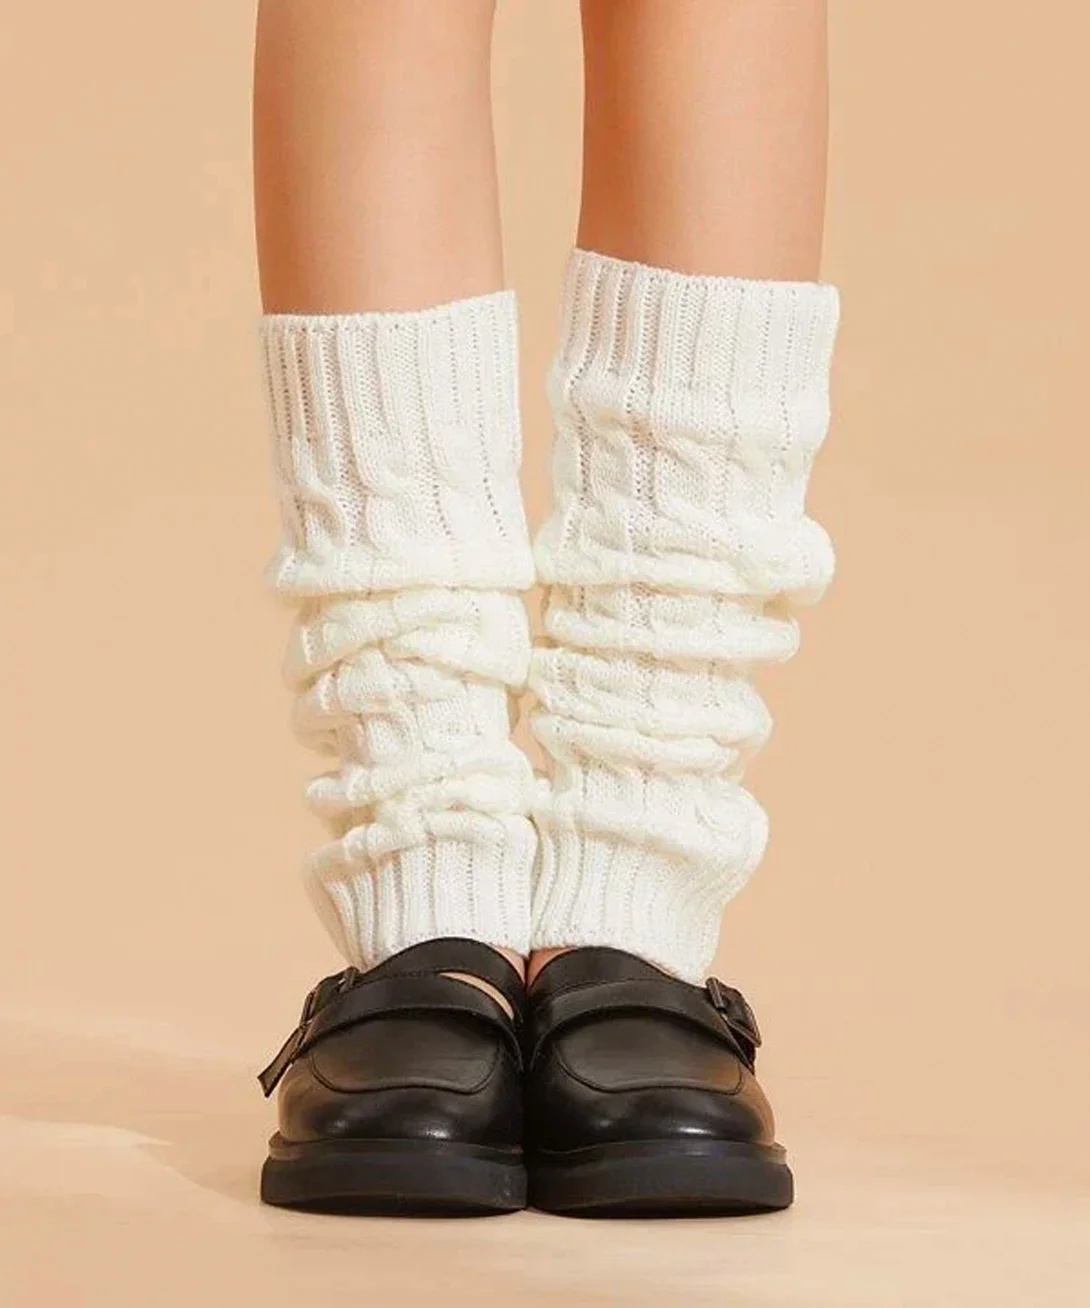 Scrunchies etc + 1076 Cable knit leg warmers